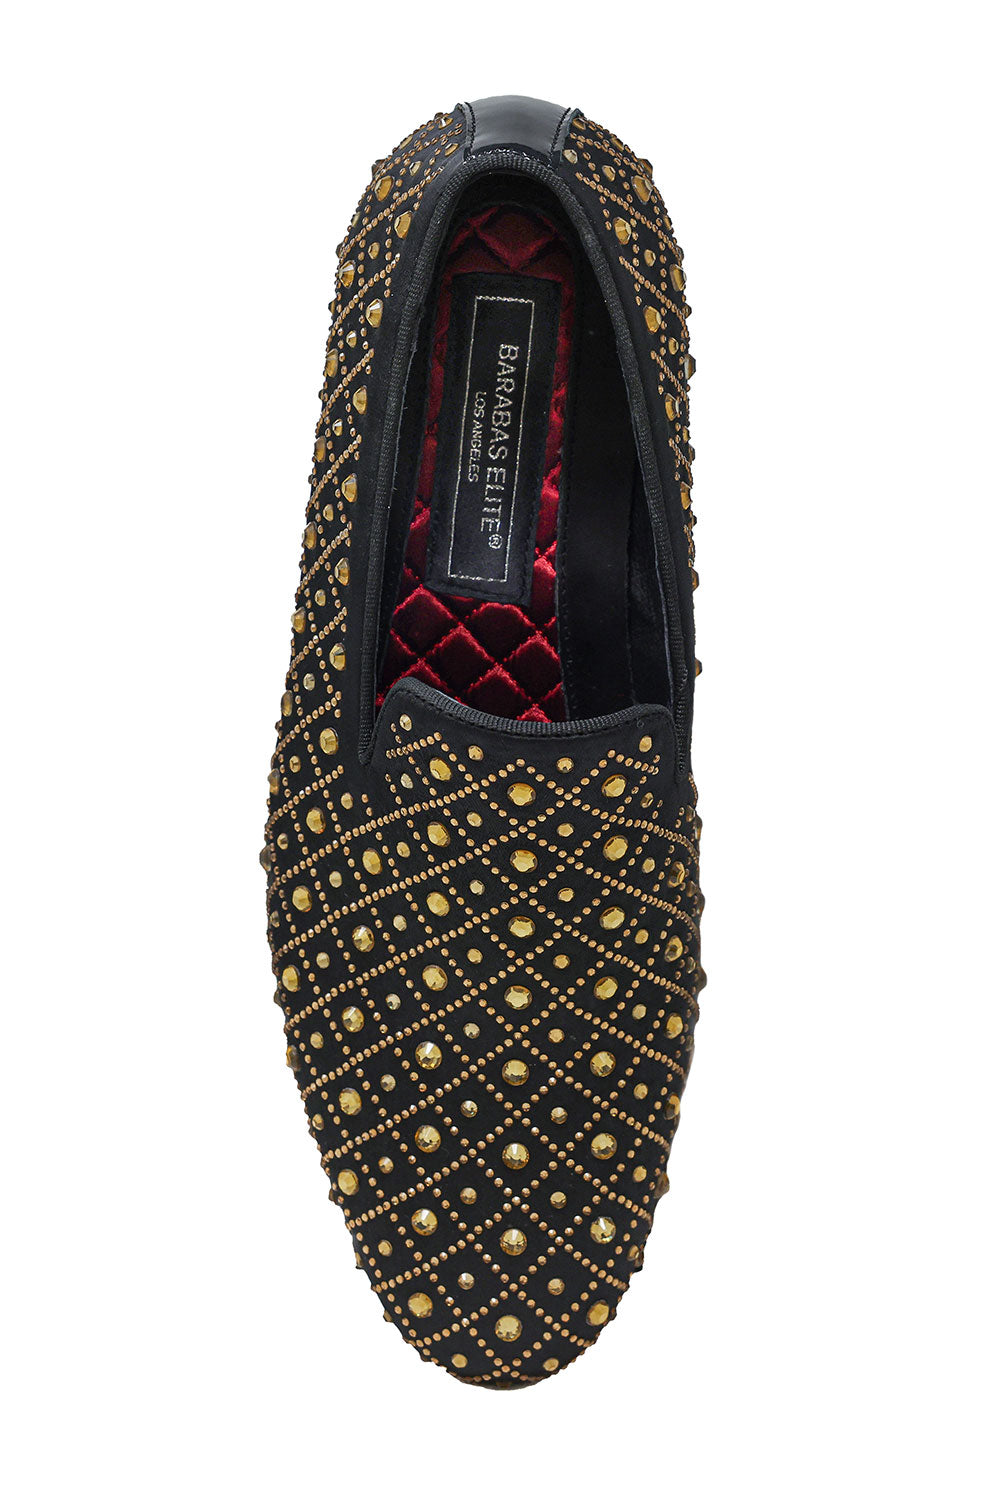 Barabas Men's Jewel Studded Pattern Slip On Luxury Dress Shoes 2ESH11 Black Gold